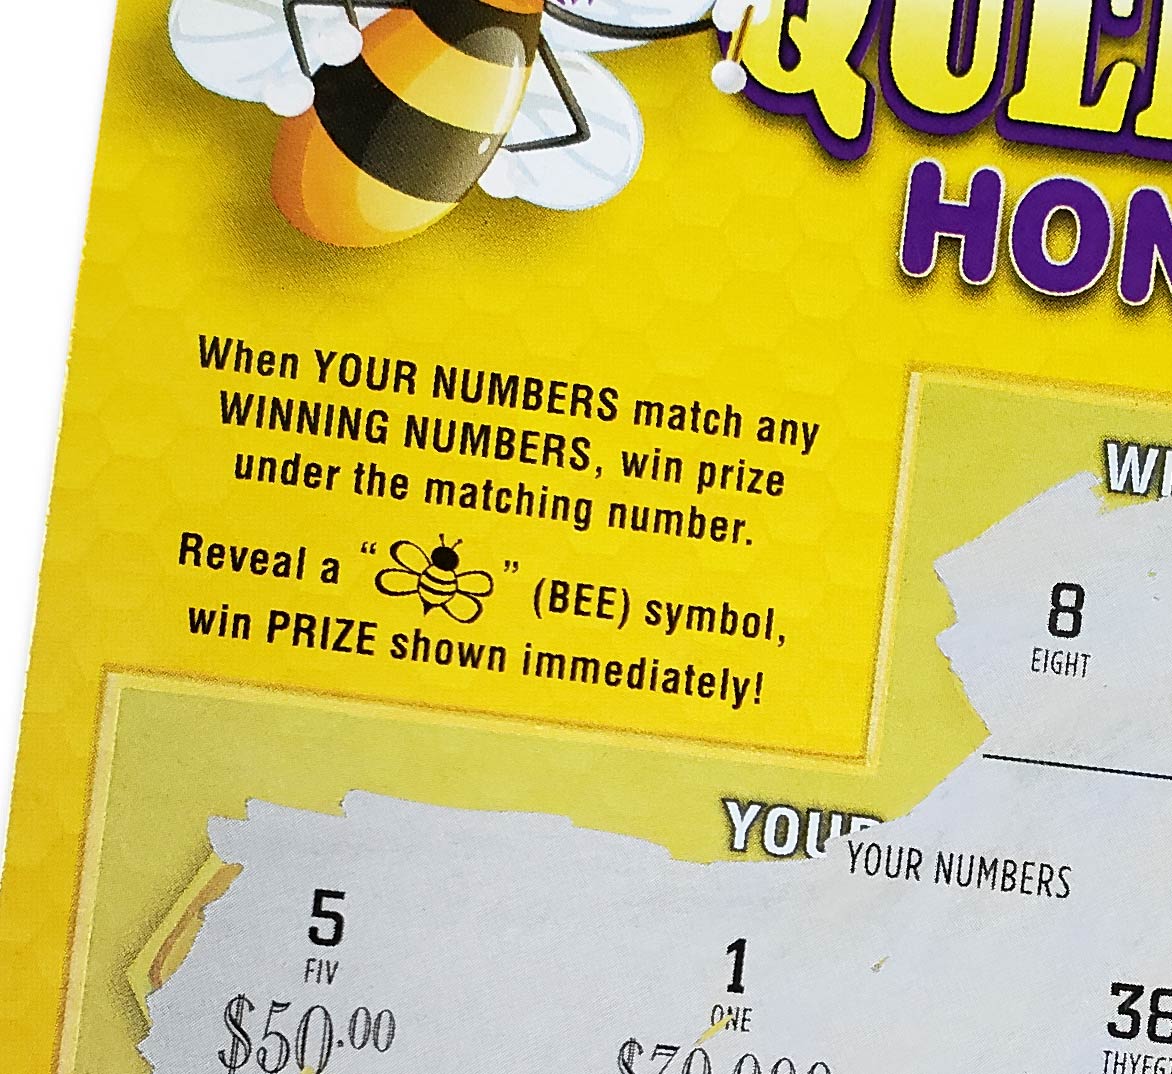 Pregnancy Announcement Scratch Off Lottery Ticket (6pk) - Joke 10,000 Dollar Win Adds Excitement